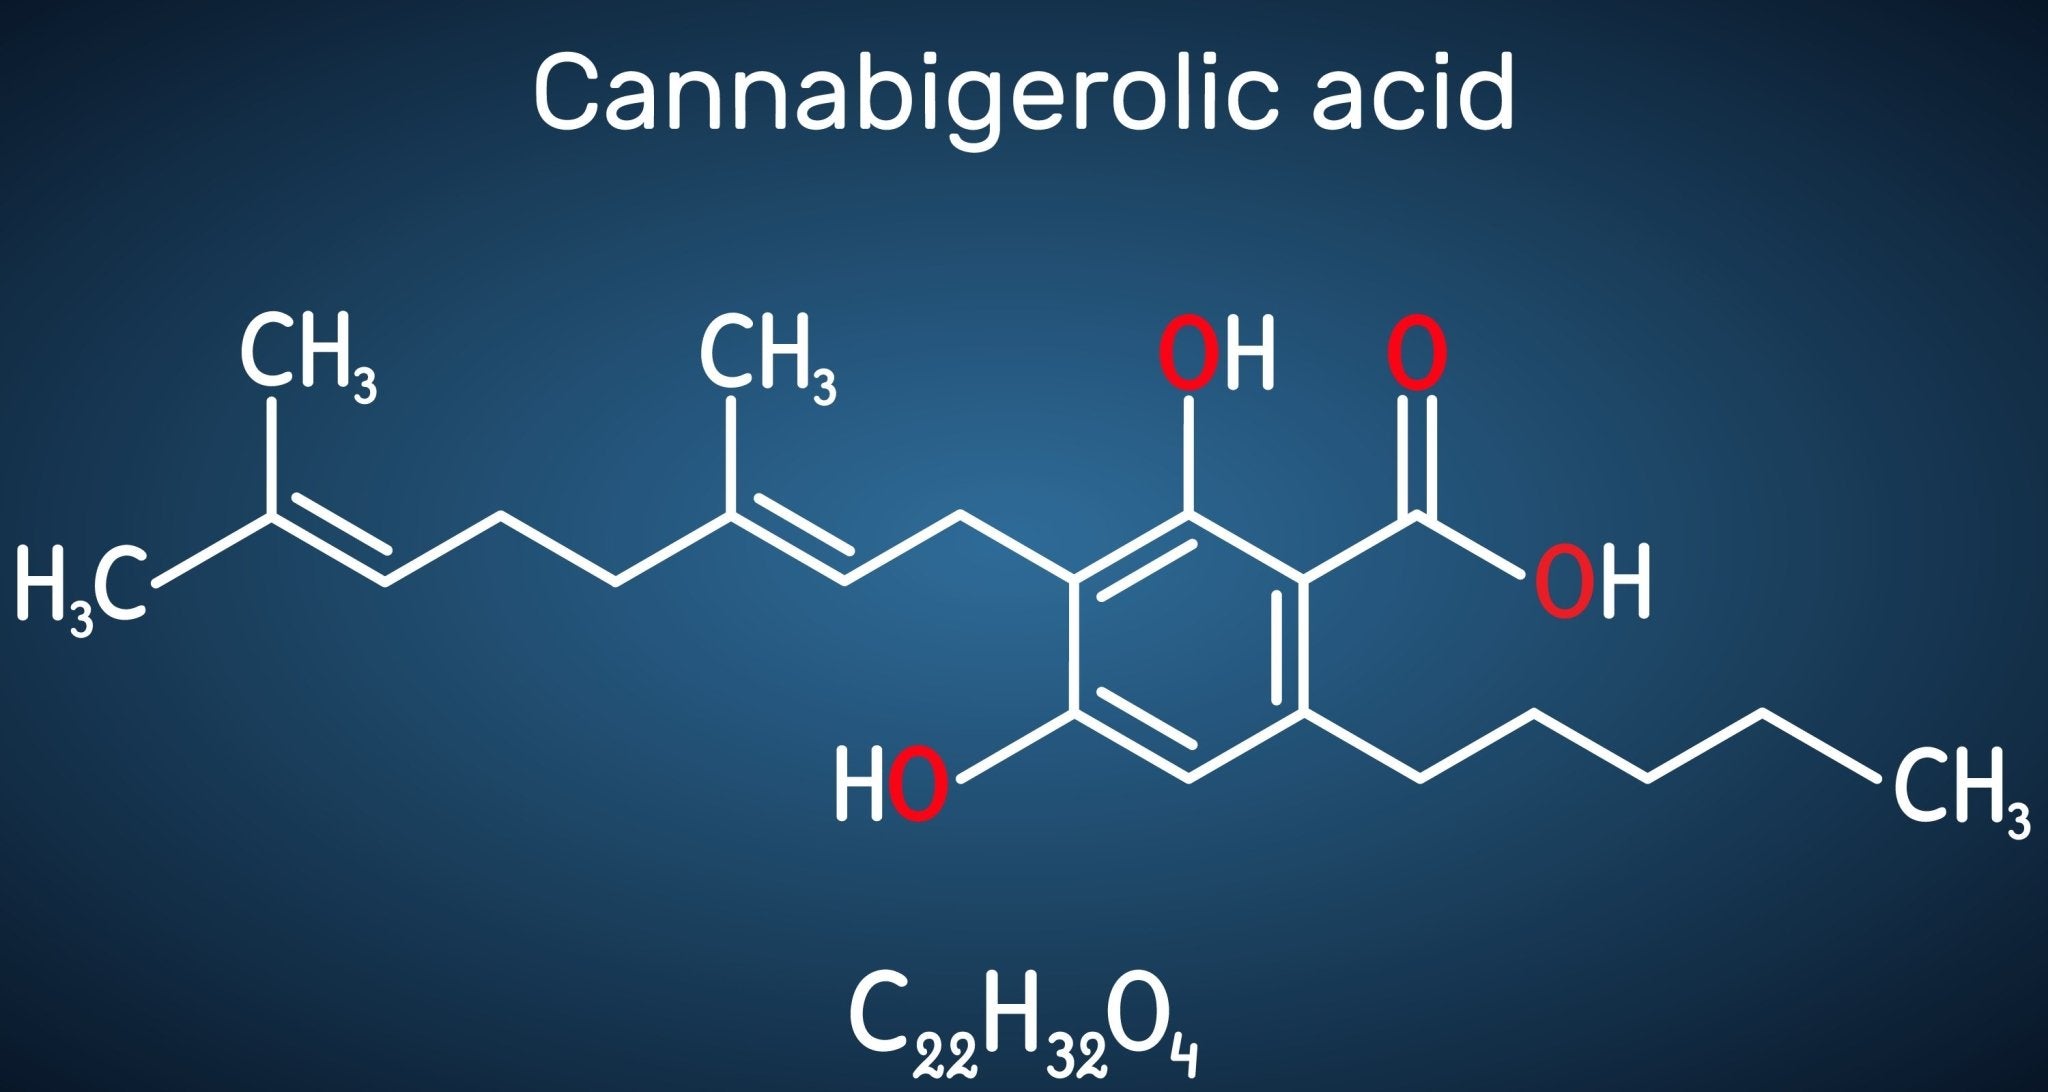 CBGA (Cannabigerolic Acid) Guide - Secret Nature